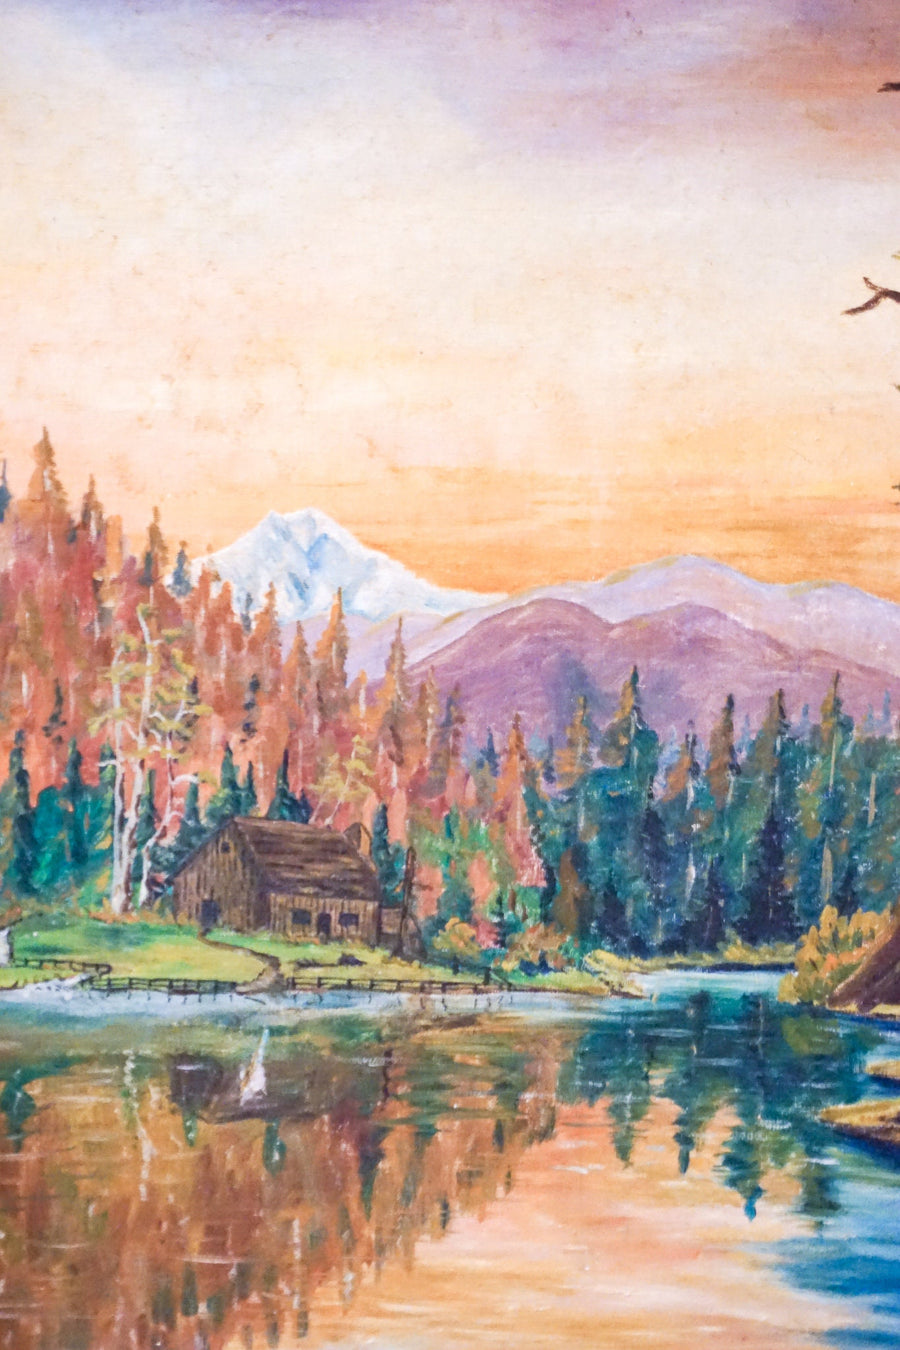 Sunset Lake Landscape Painting with Wood Frame